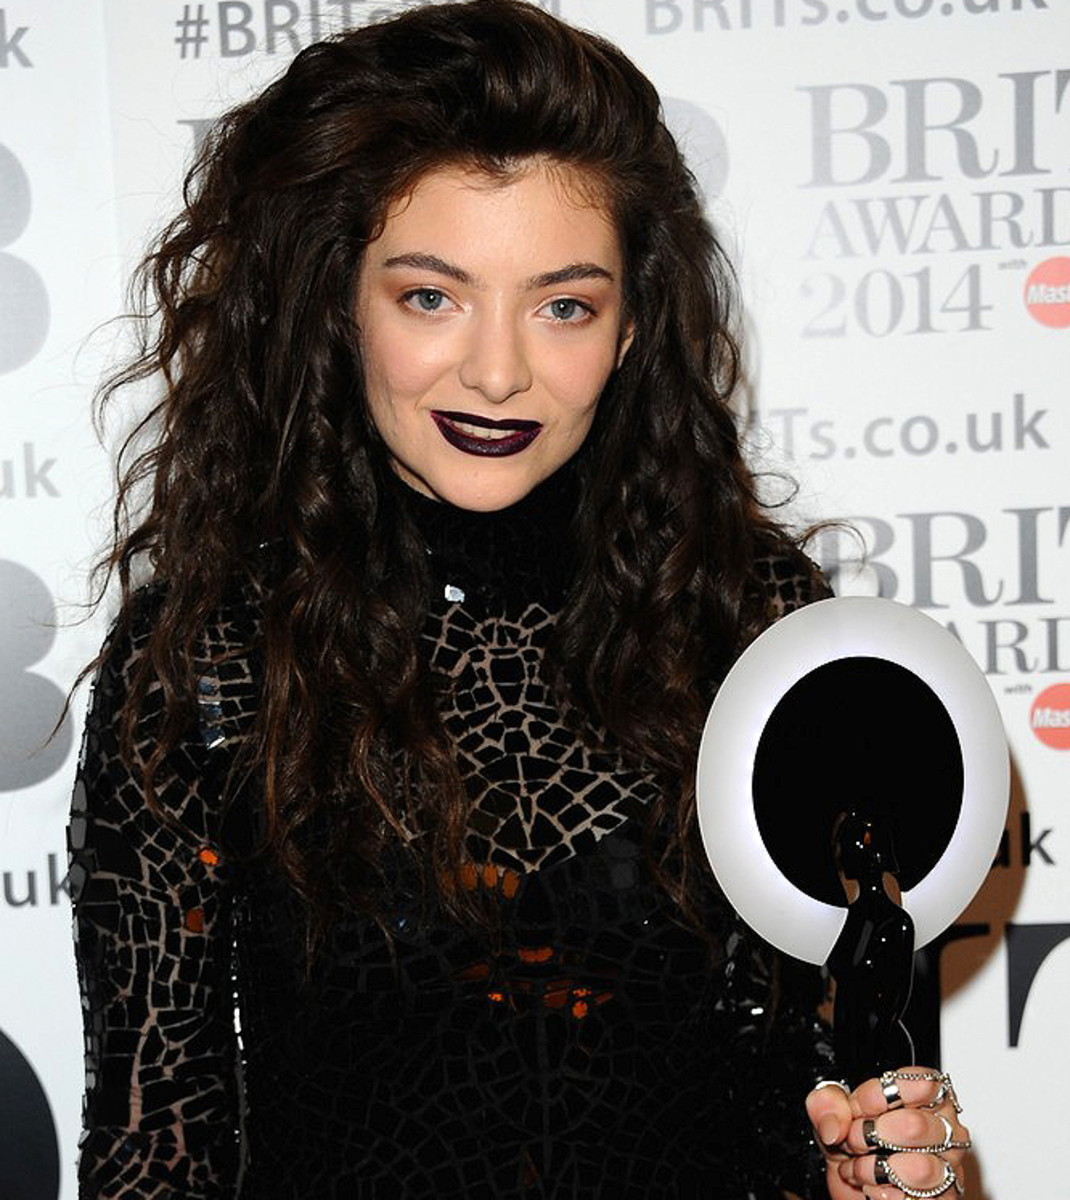 MAC-Lorde_Lorde-at-the-Brit-Awards-via-JustJared